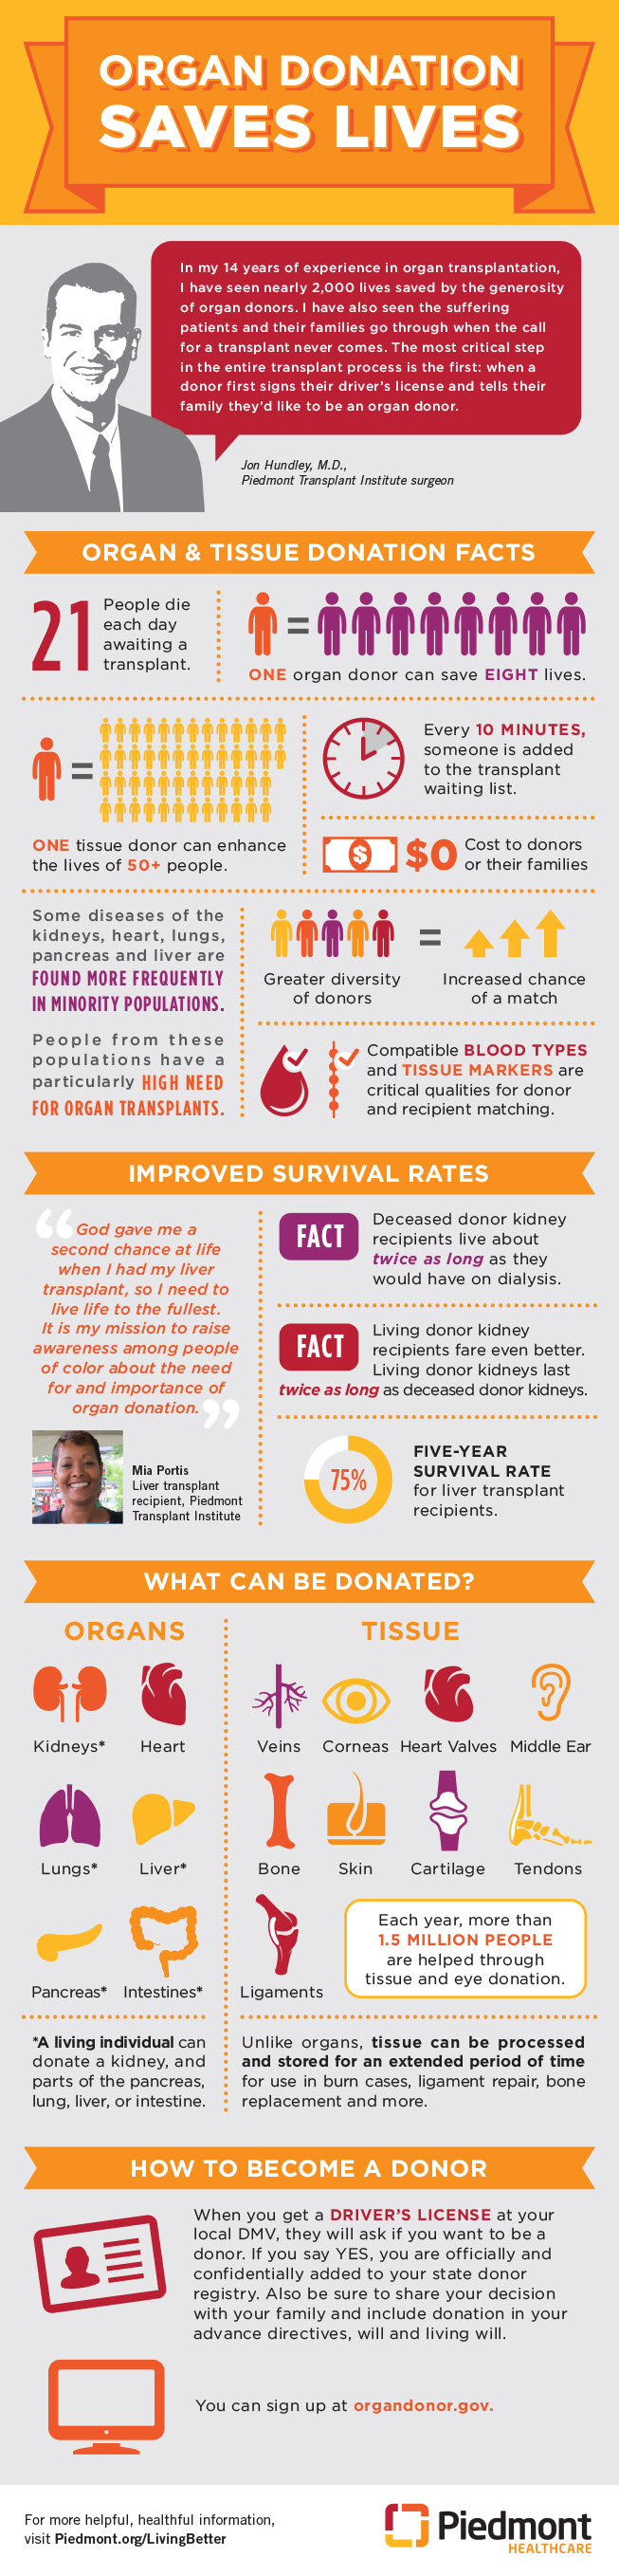 Organ donation saves lives graphic